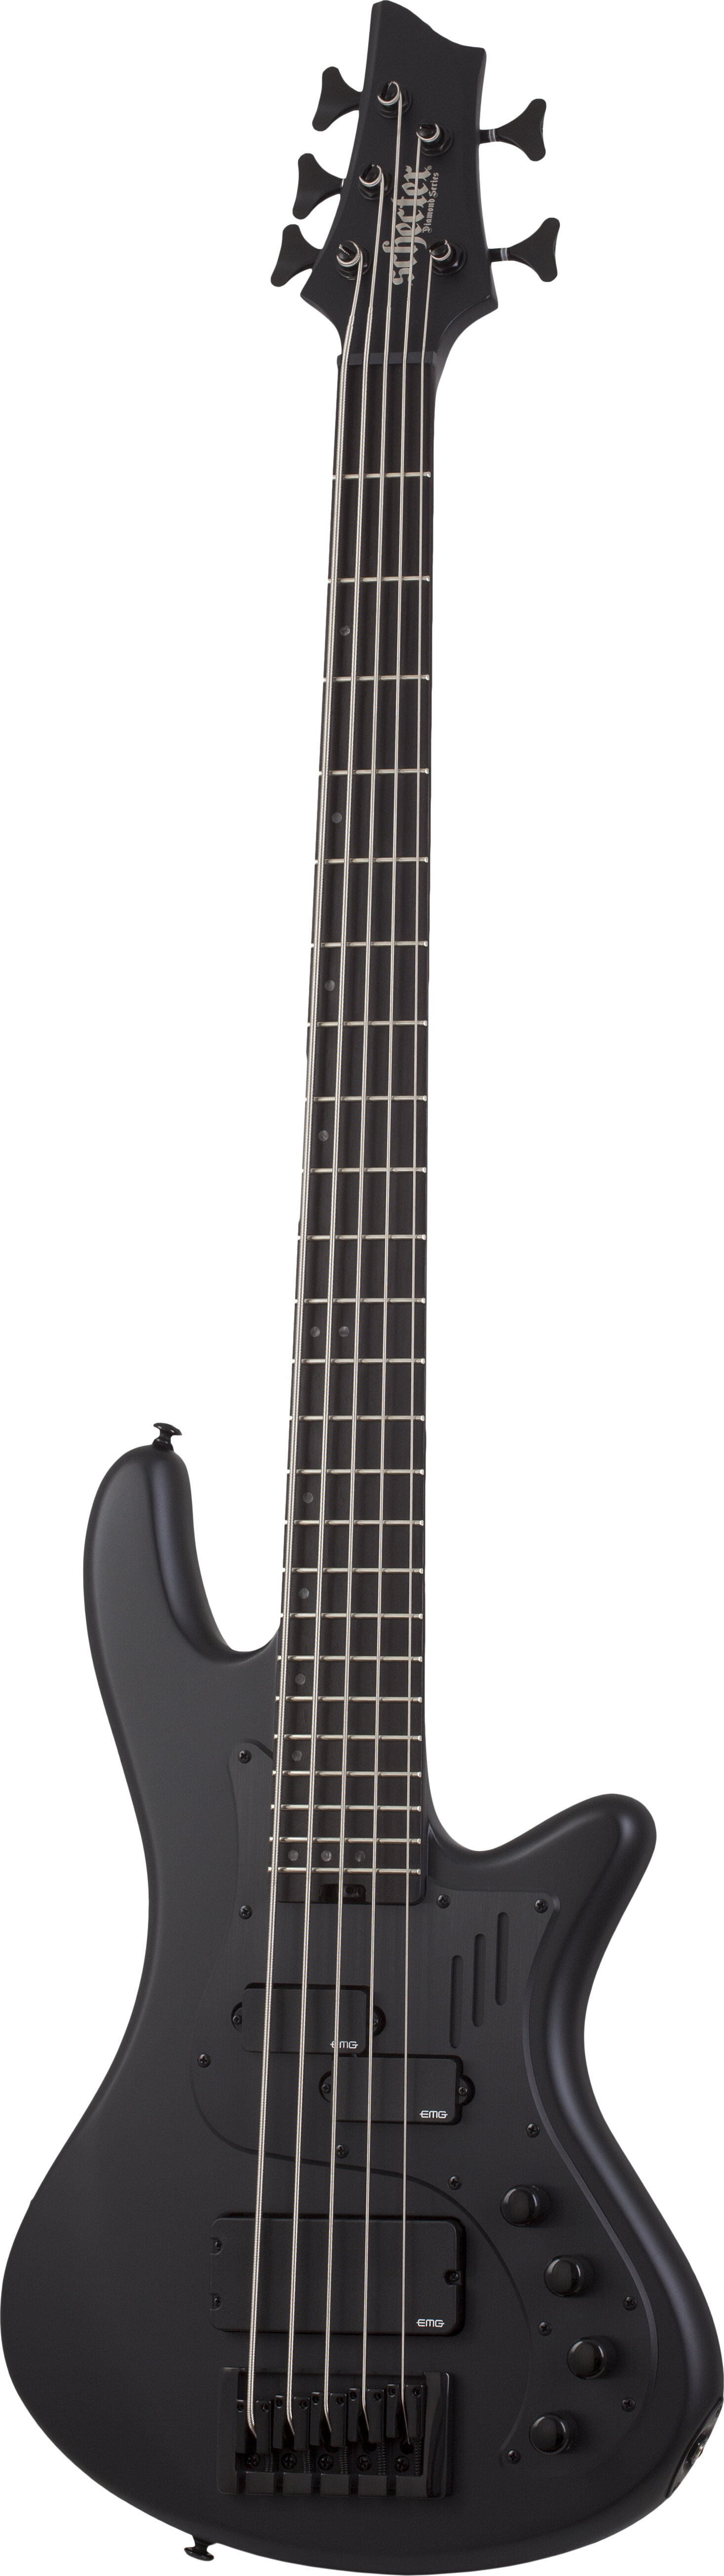 Schecter Stiletto 5 Stealth Pro Bass Satin Black -  2271